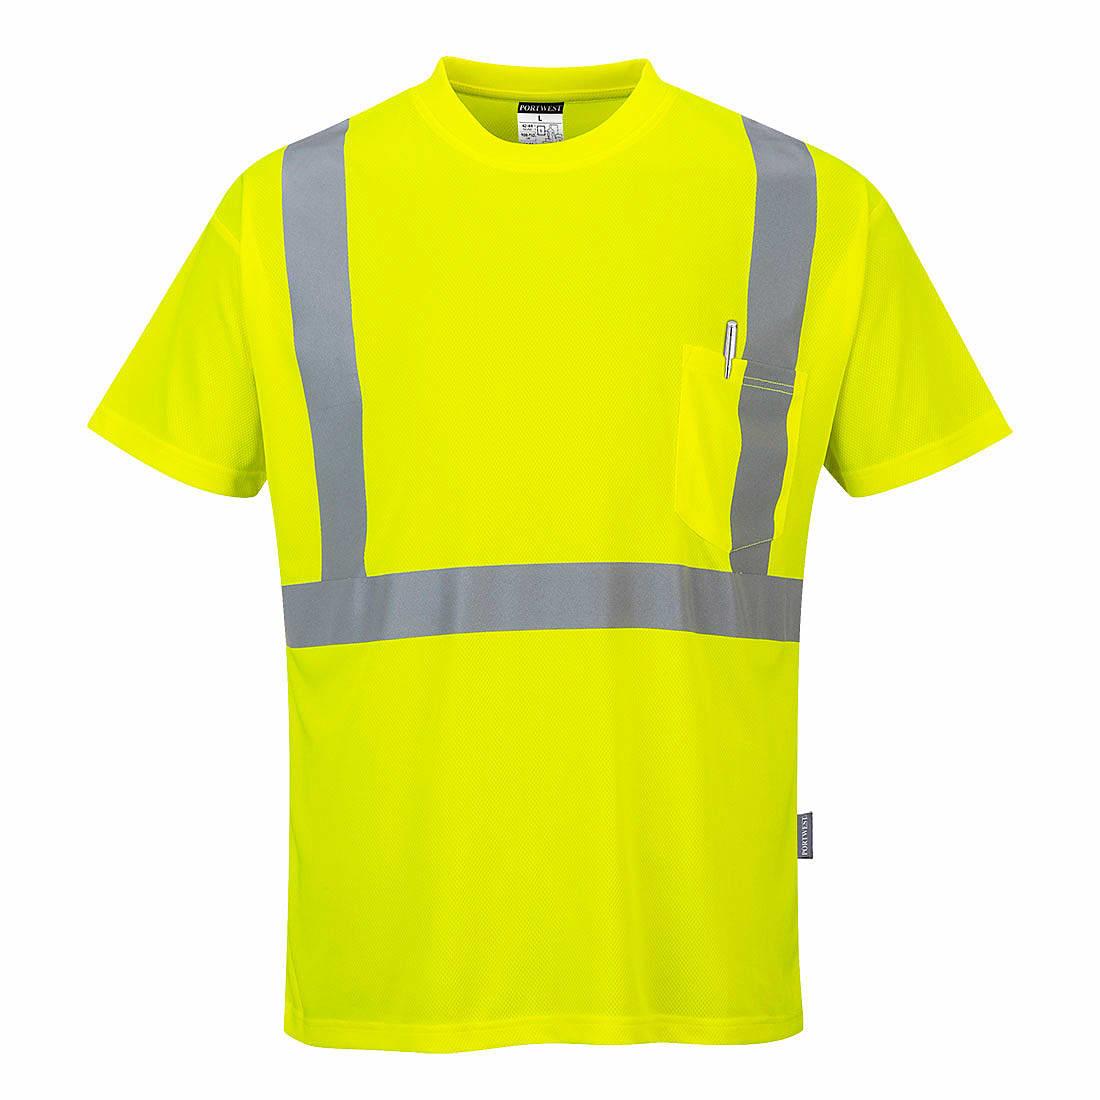 Portwest Hi-Viz Pocket T-Shirt in Yellow (Product Code: S190)